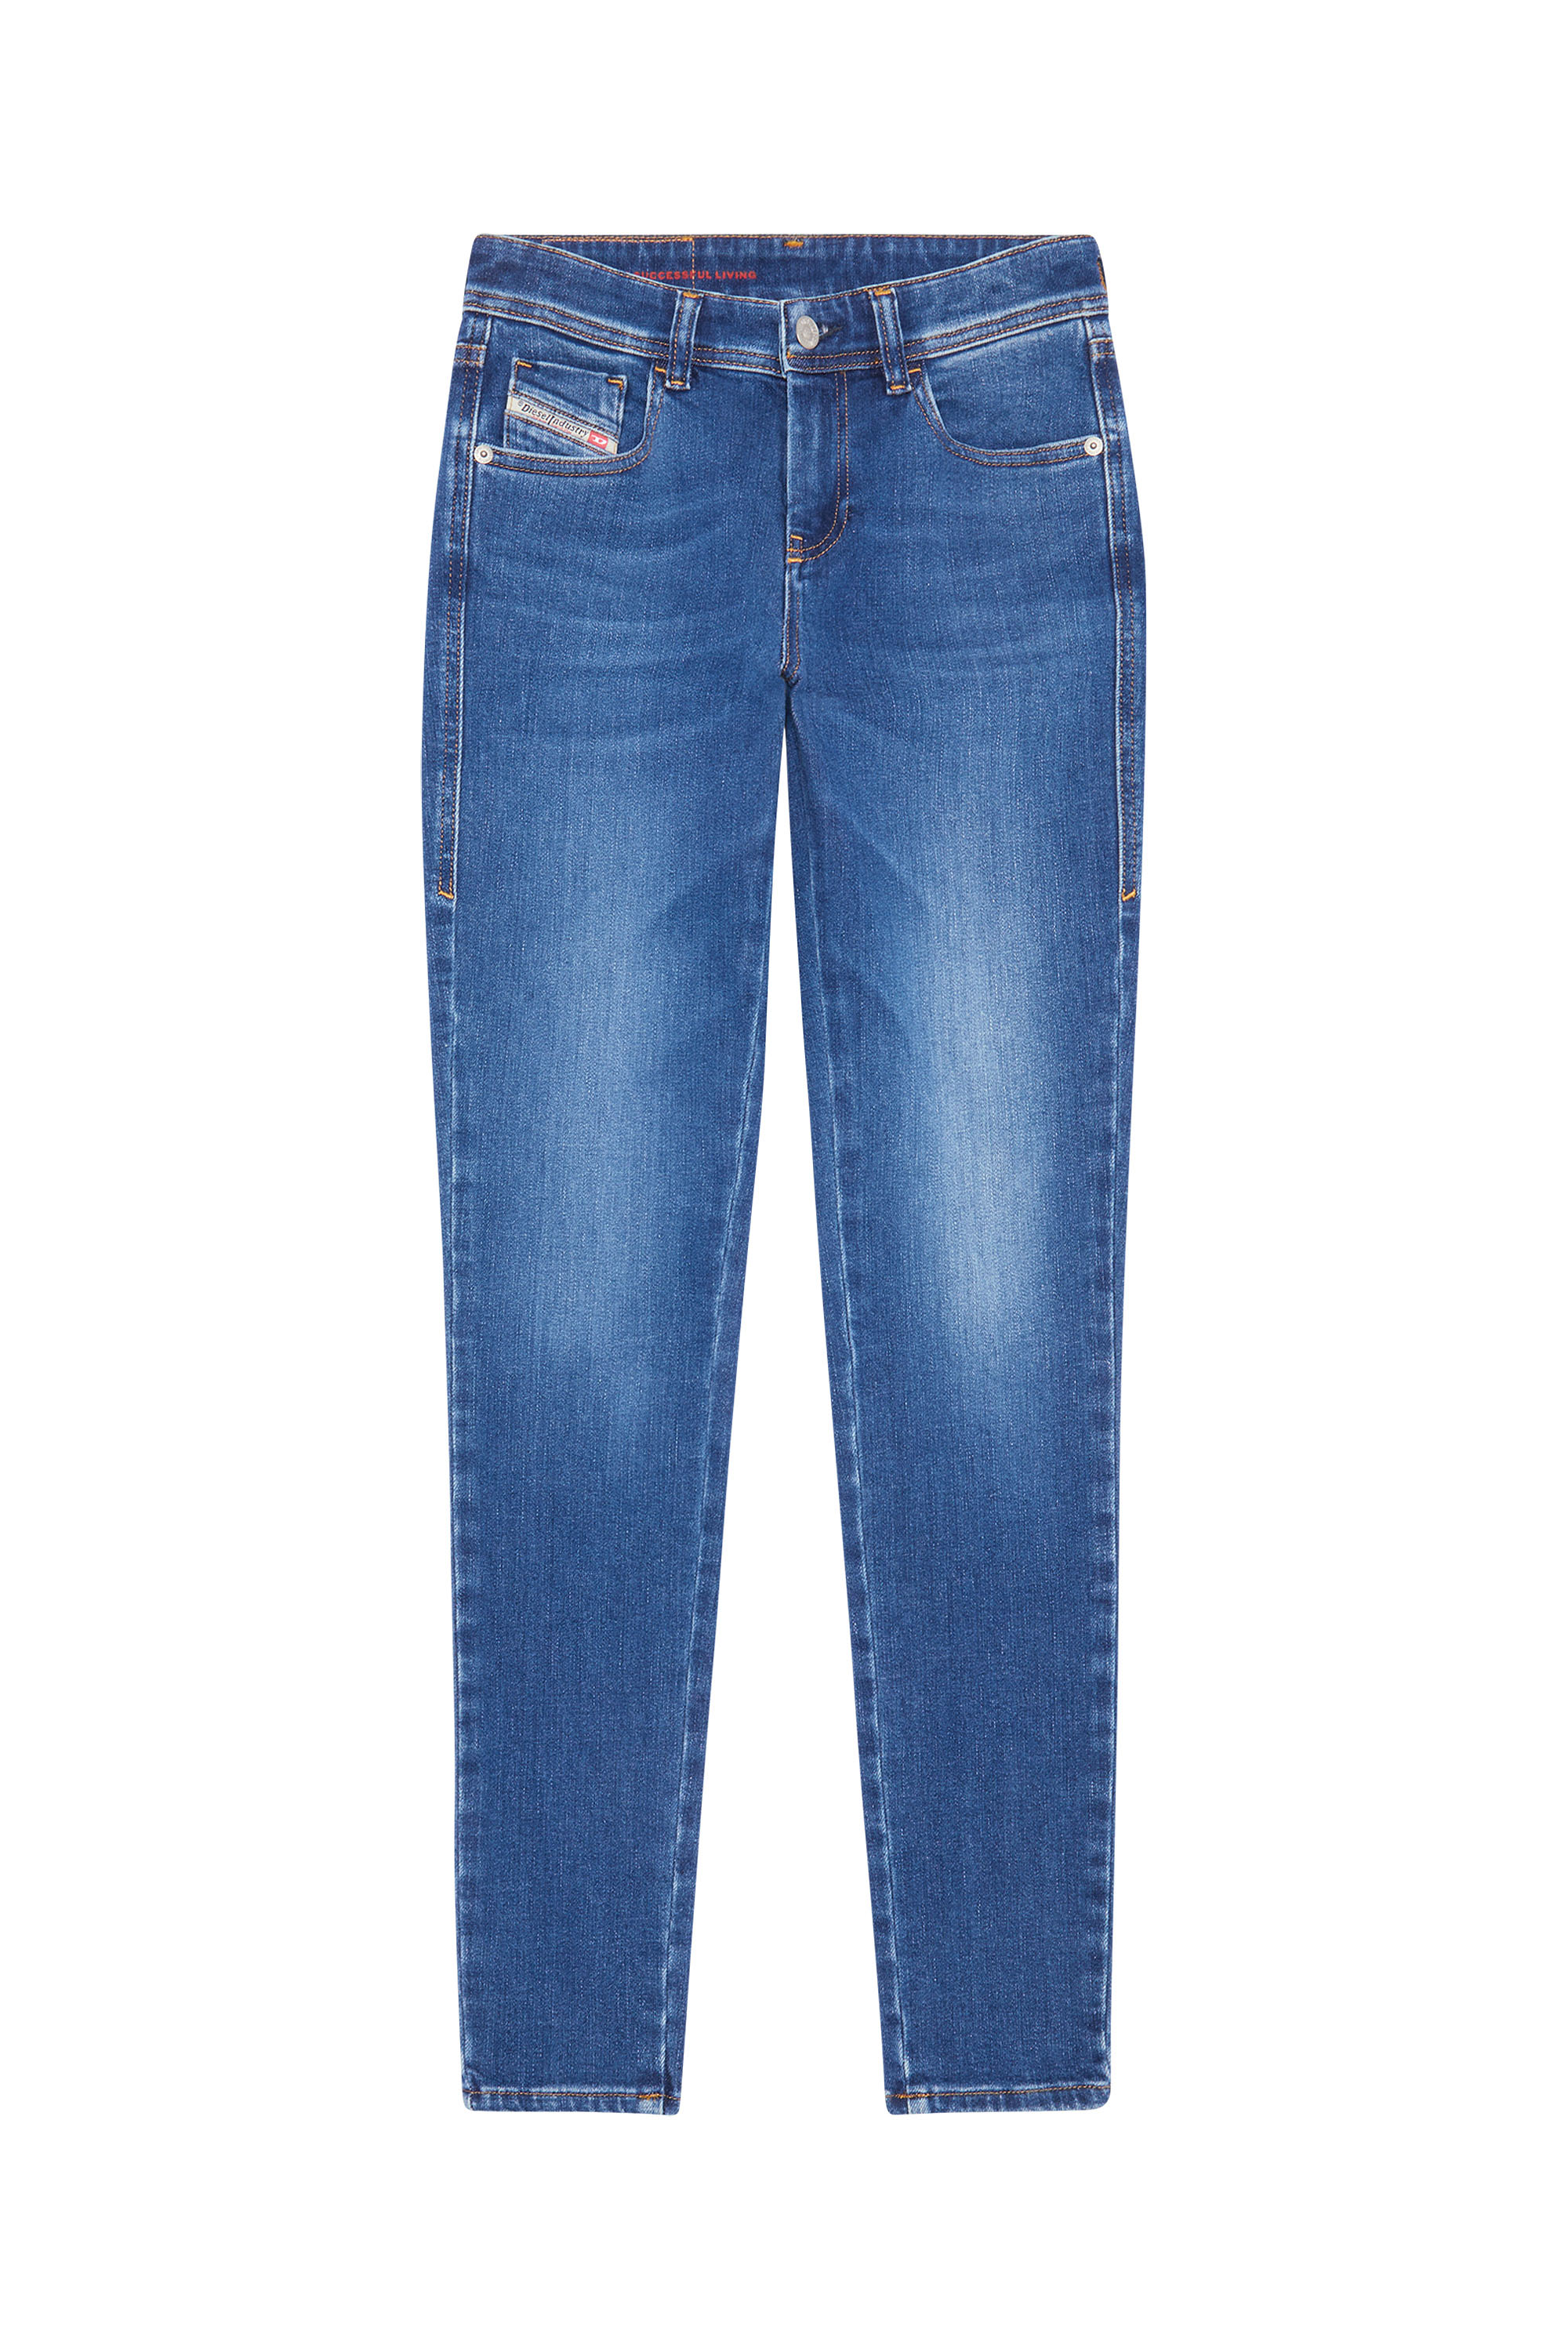 Super skinny Jeans 2017 Slandy 09C21, Medium blue - Jeans